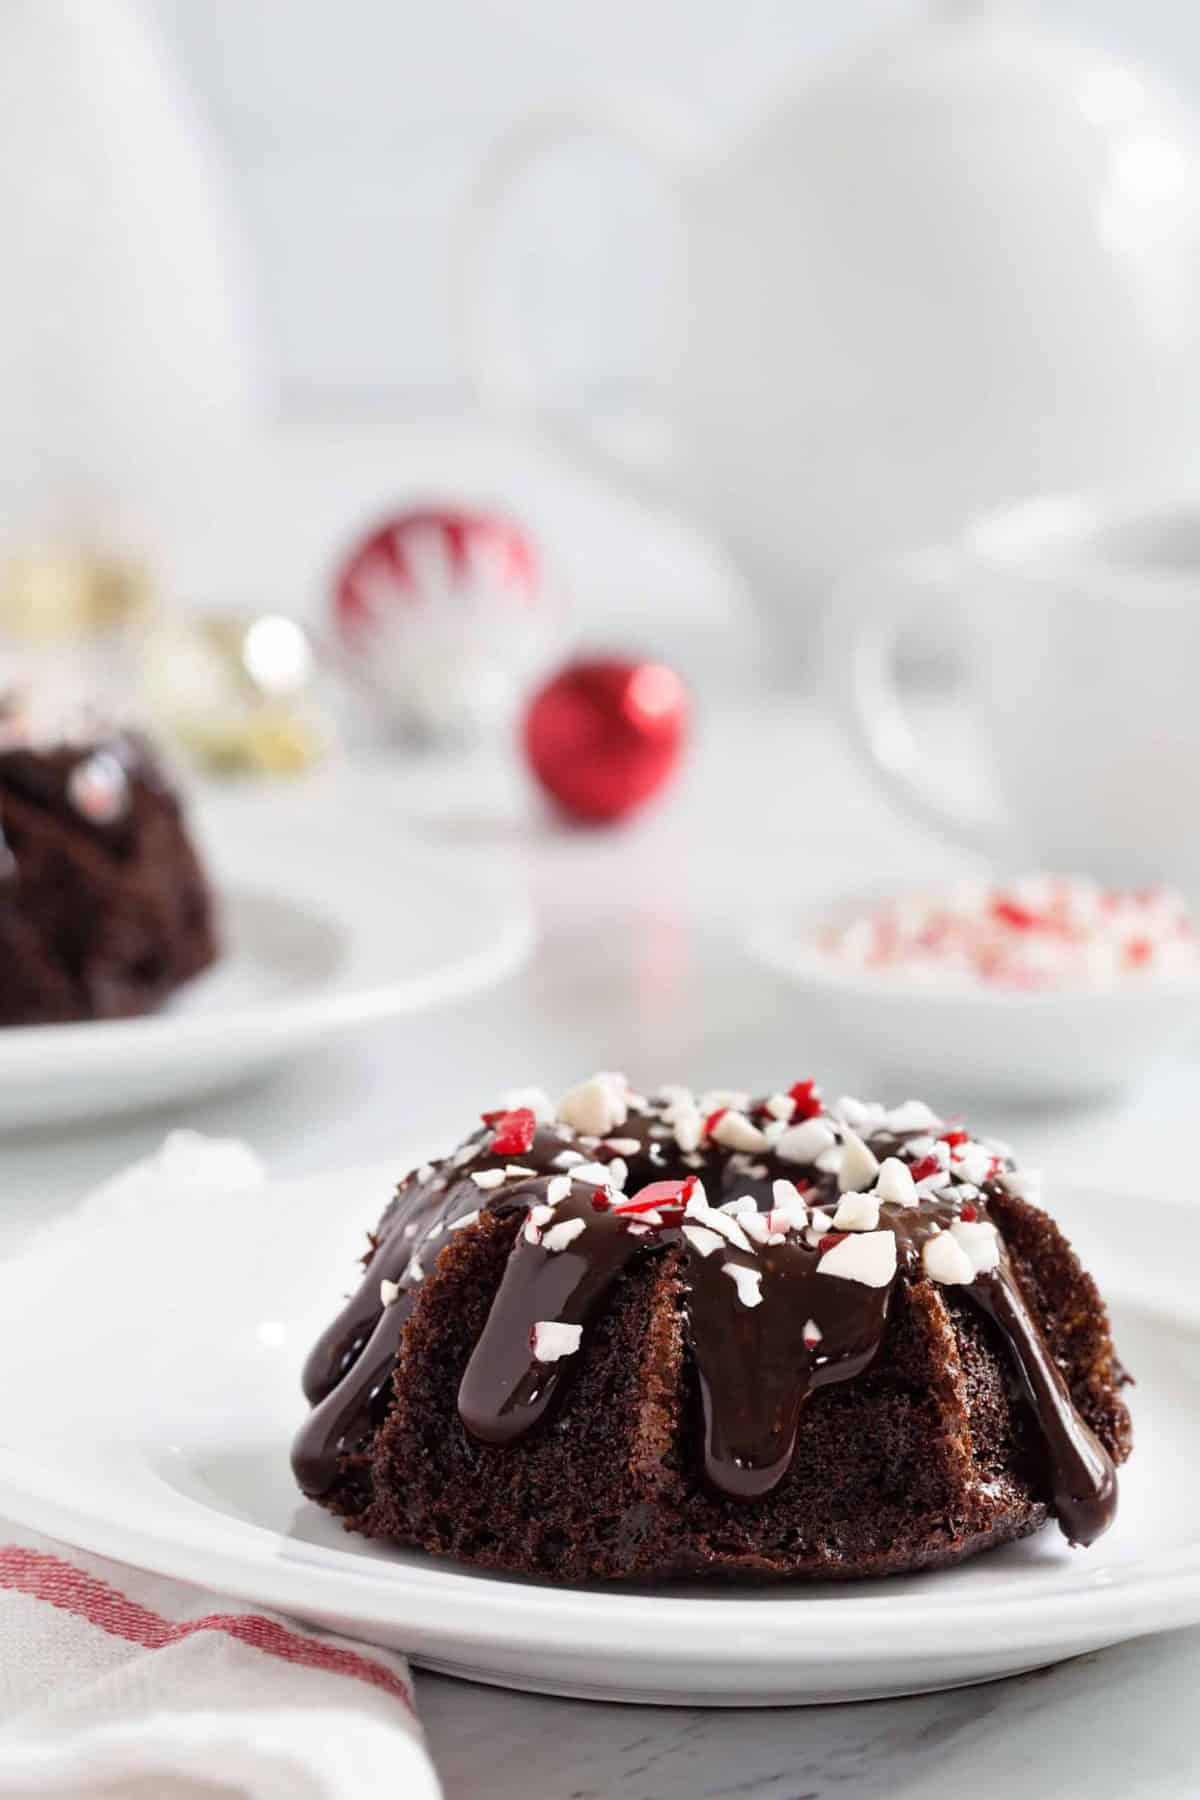 https://www.mybakingaddiction.com/wp-content/uploads/2017/12/Chocolate-Peppermint-Mini-Bundt-Cakes-Recipe-Picture-HR-scaled.jpg